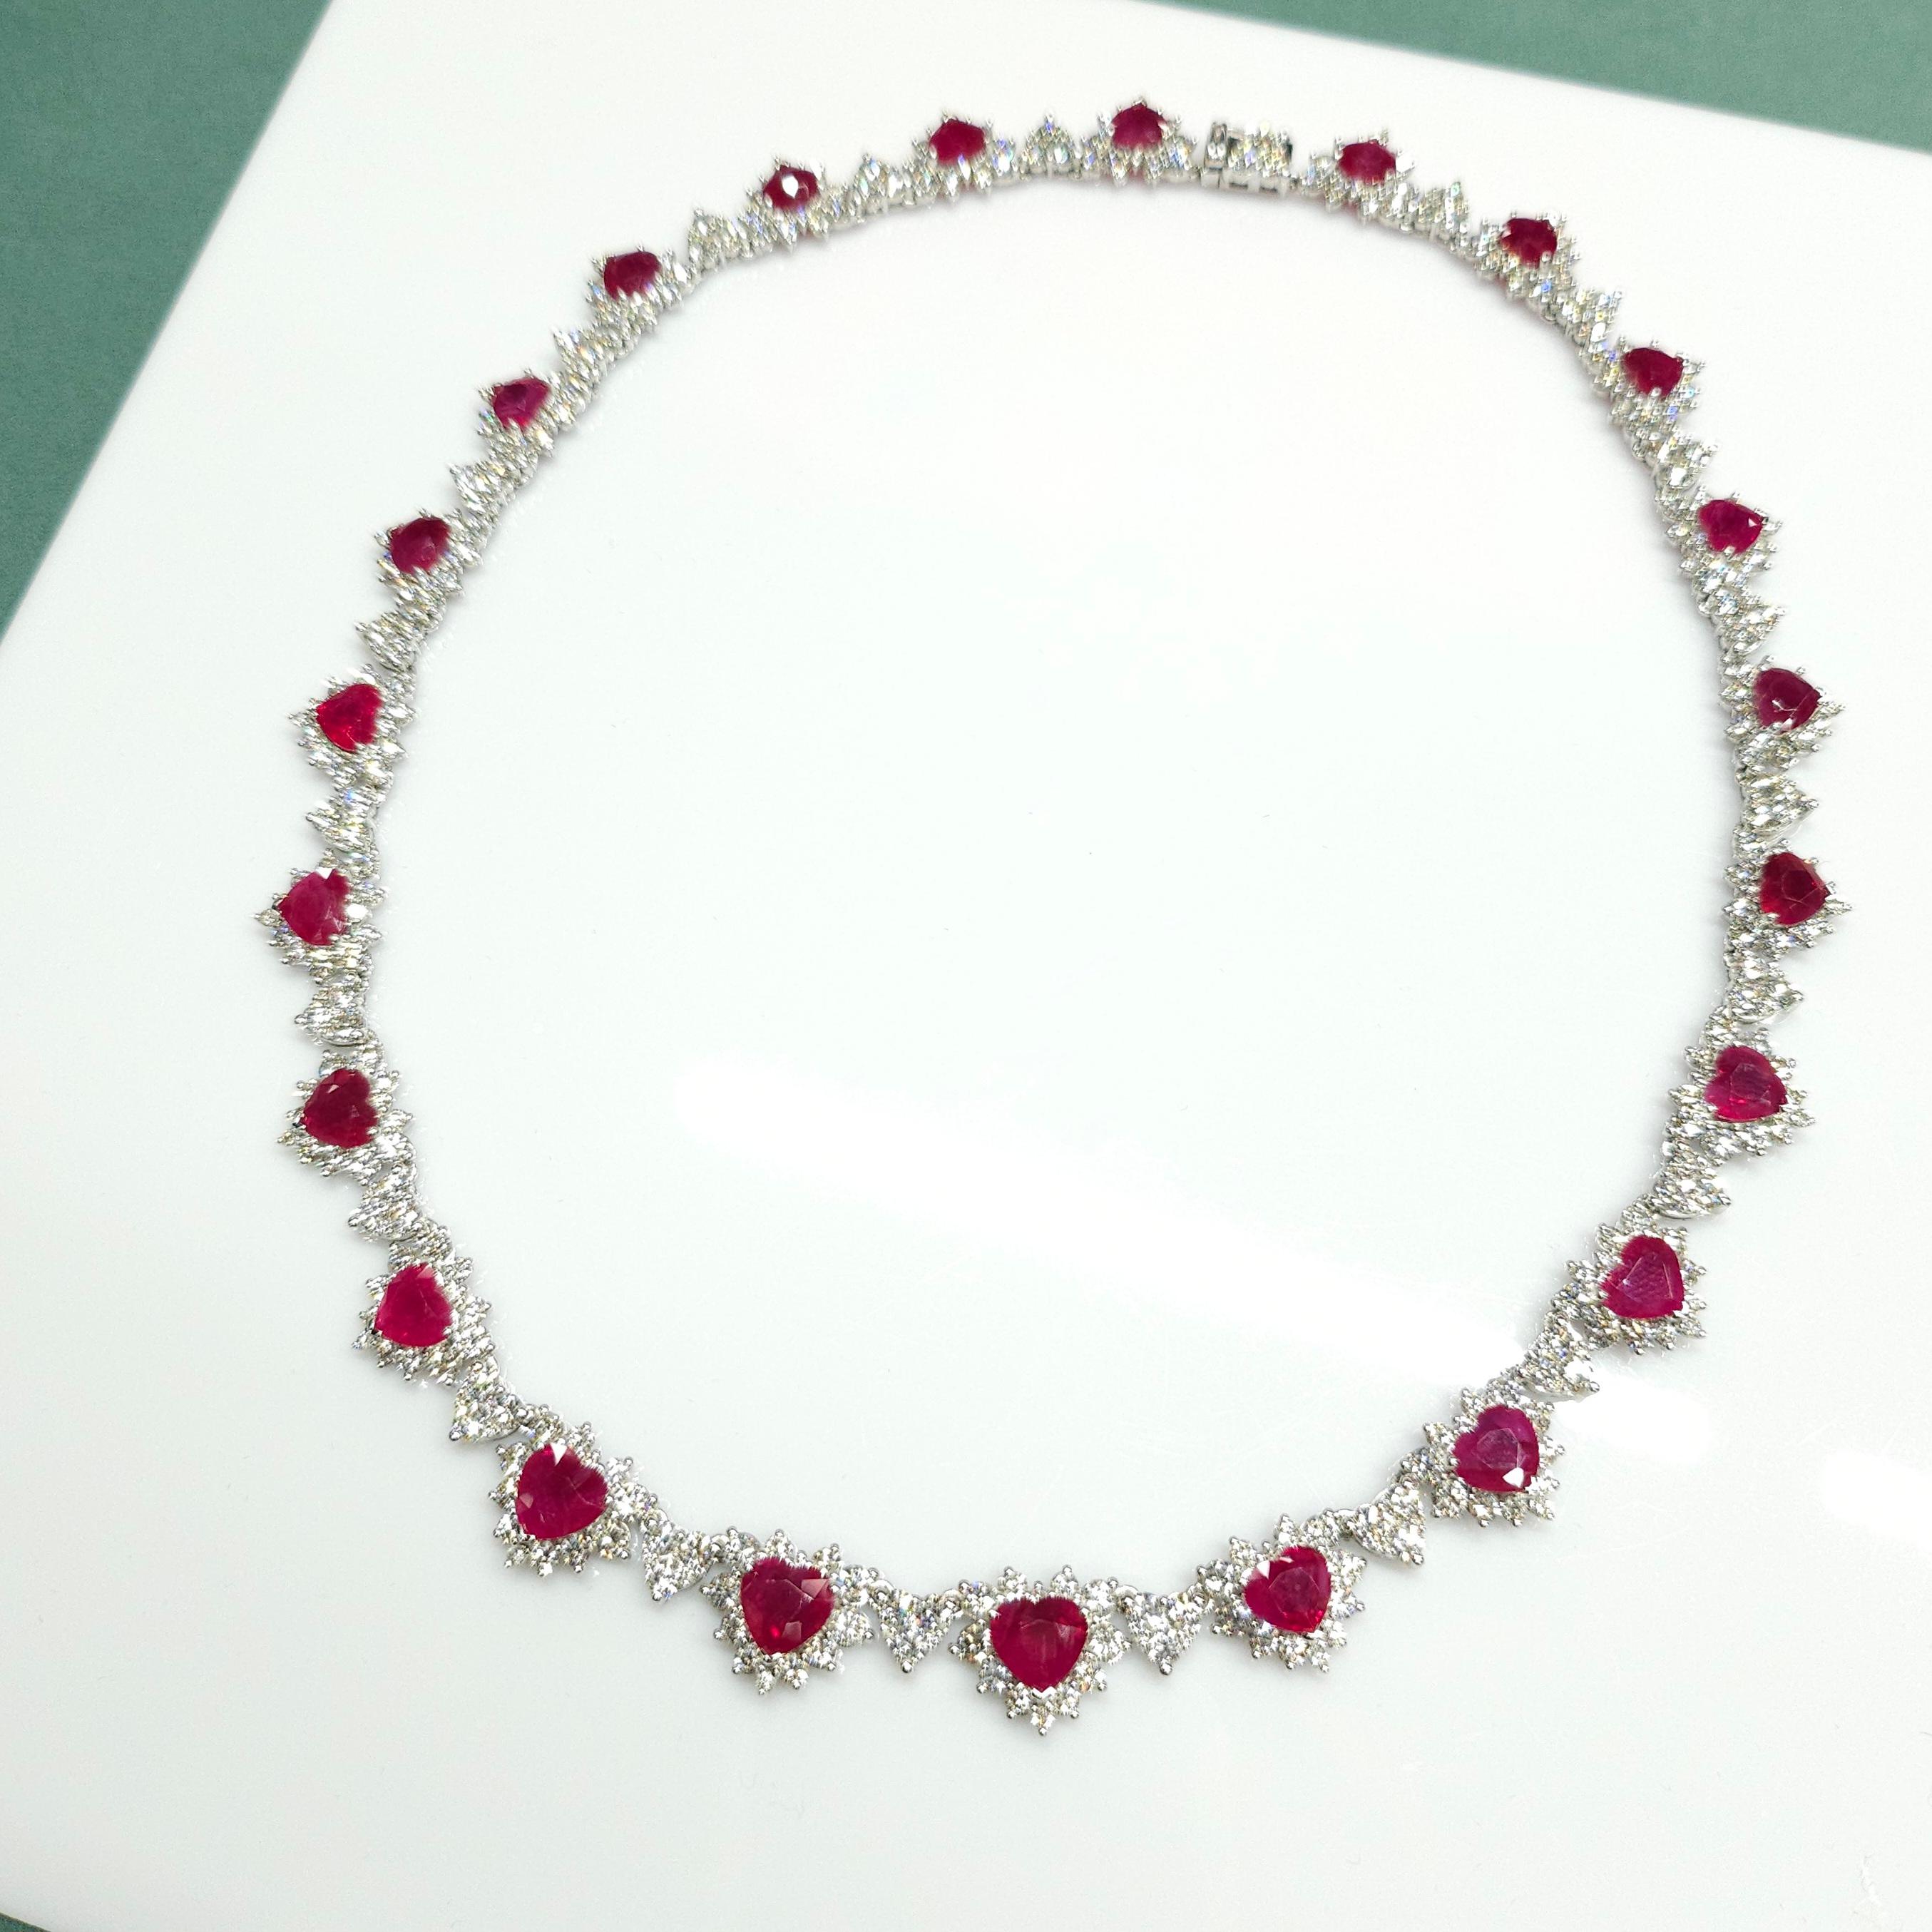 IGI Certified 26.58 Carat Burma Ruby & 18.85 Carat Diamond Necklace in 18K Gold For Sale 7